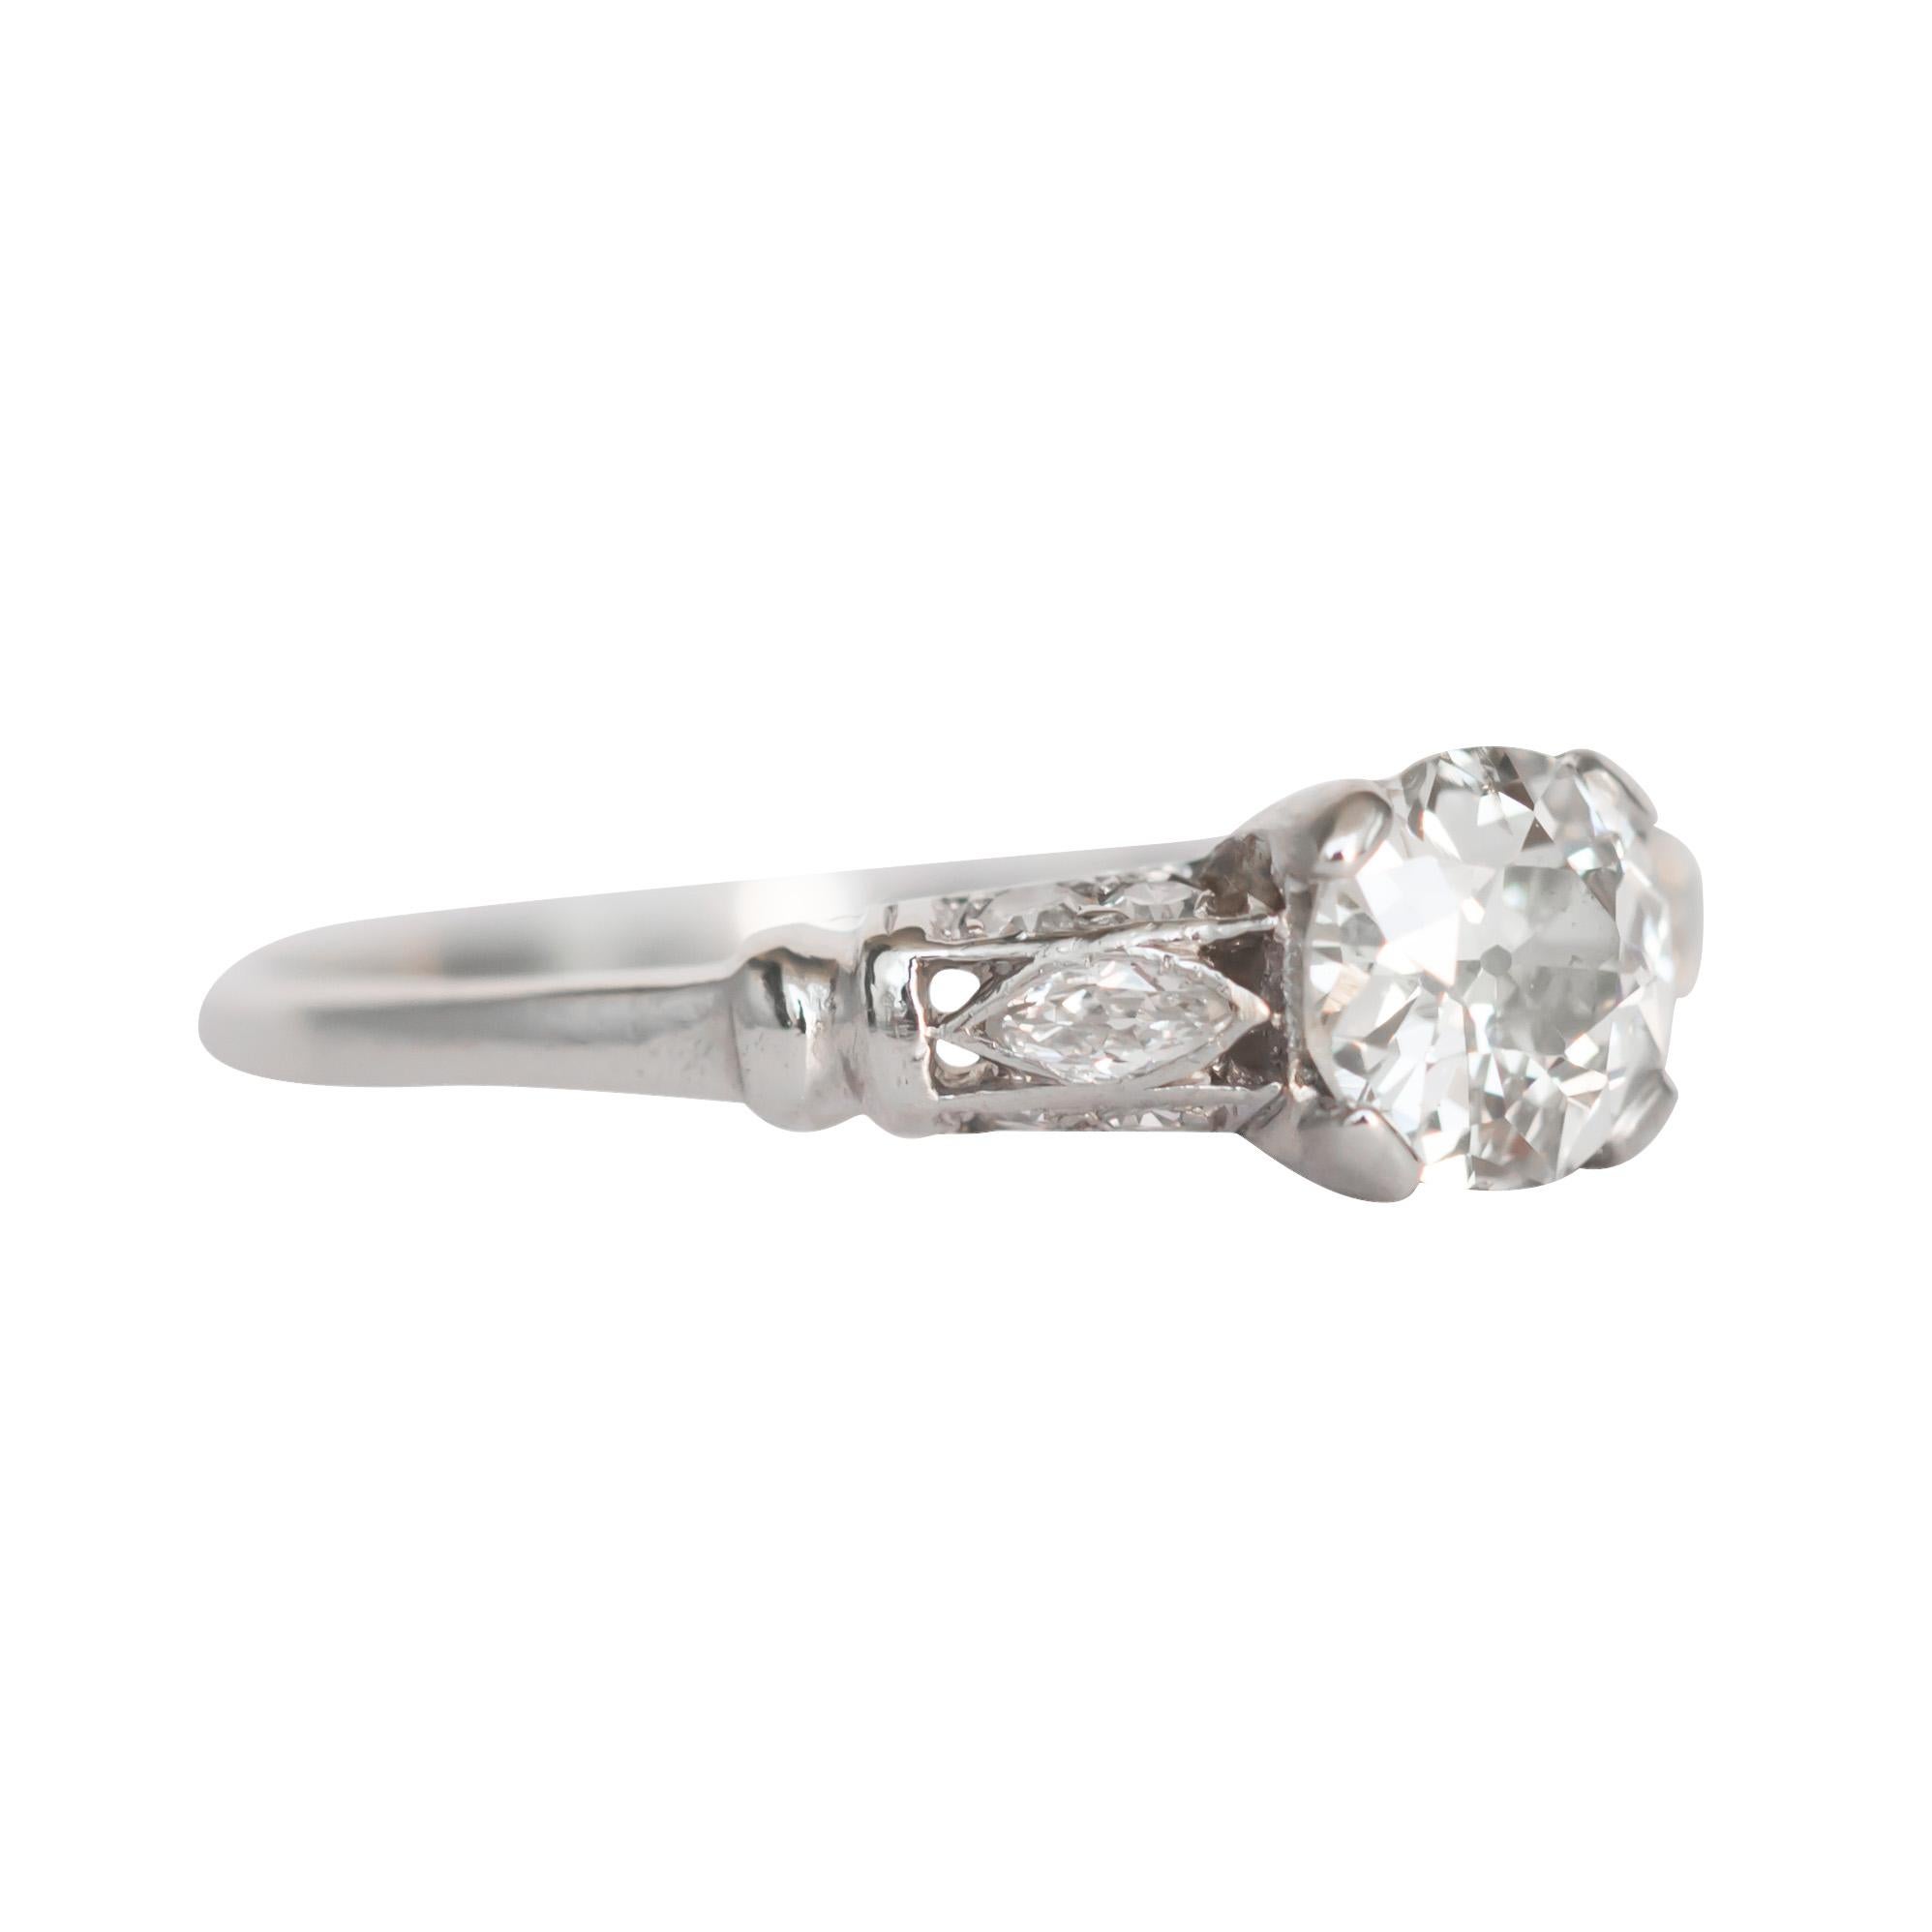 61 carat diamond ring